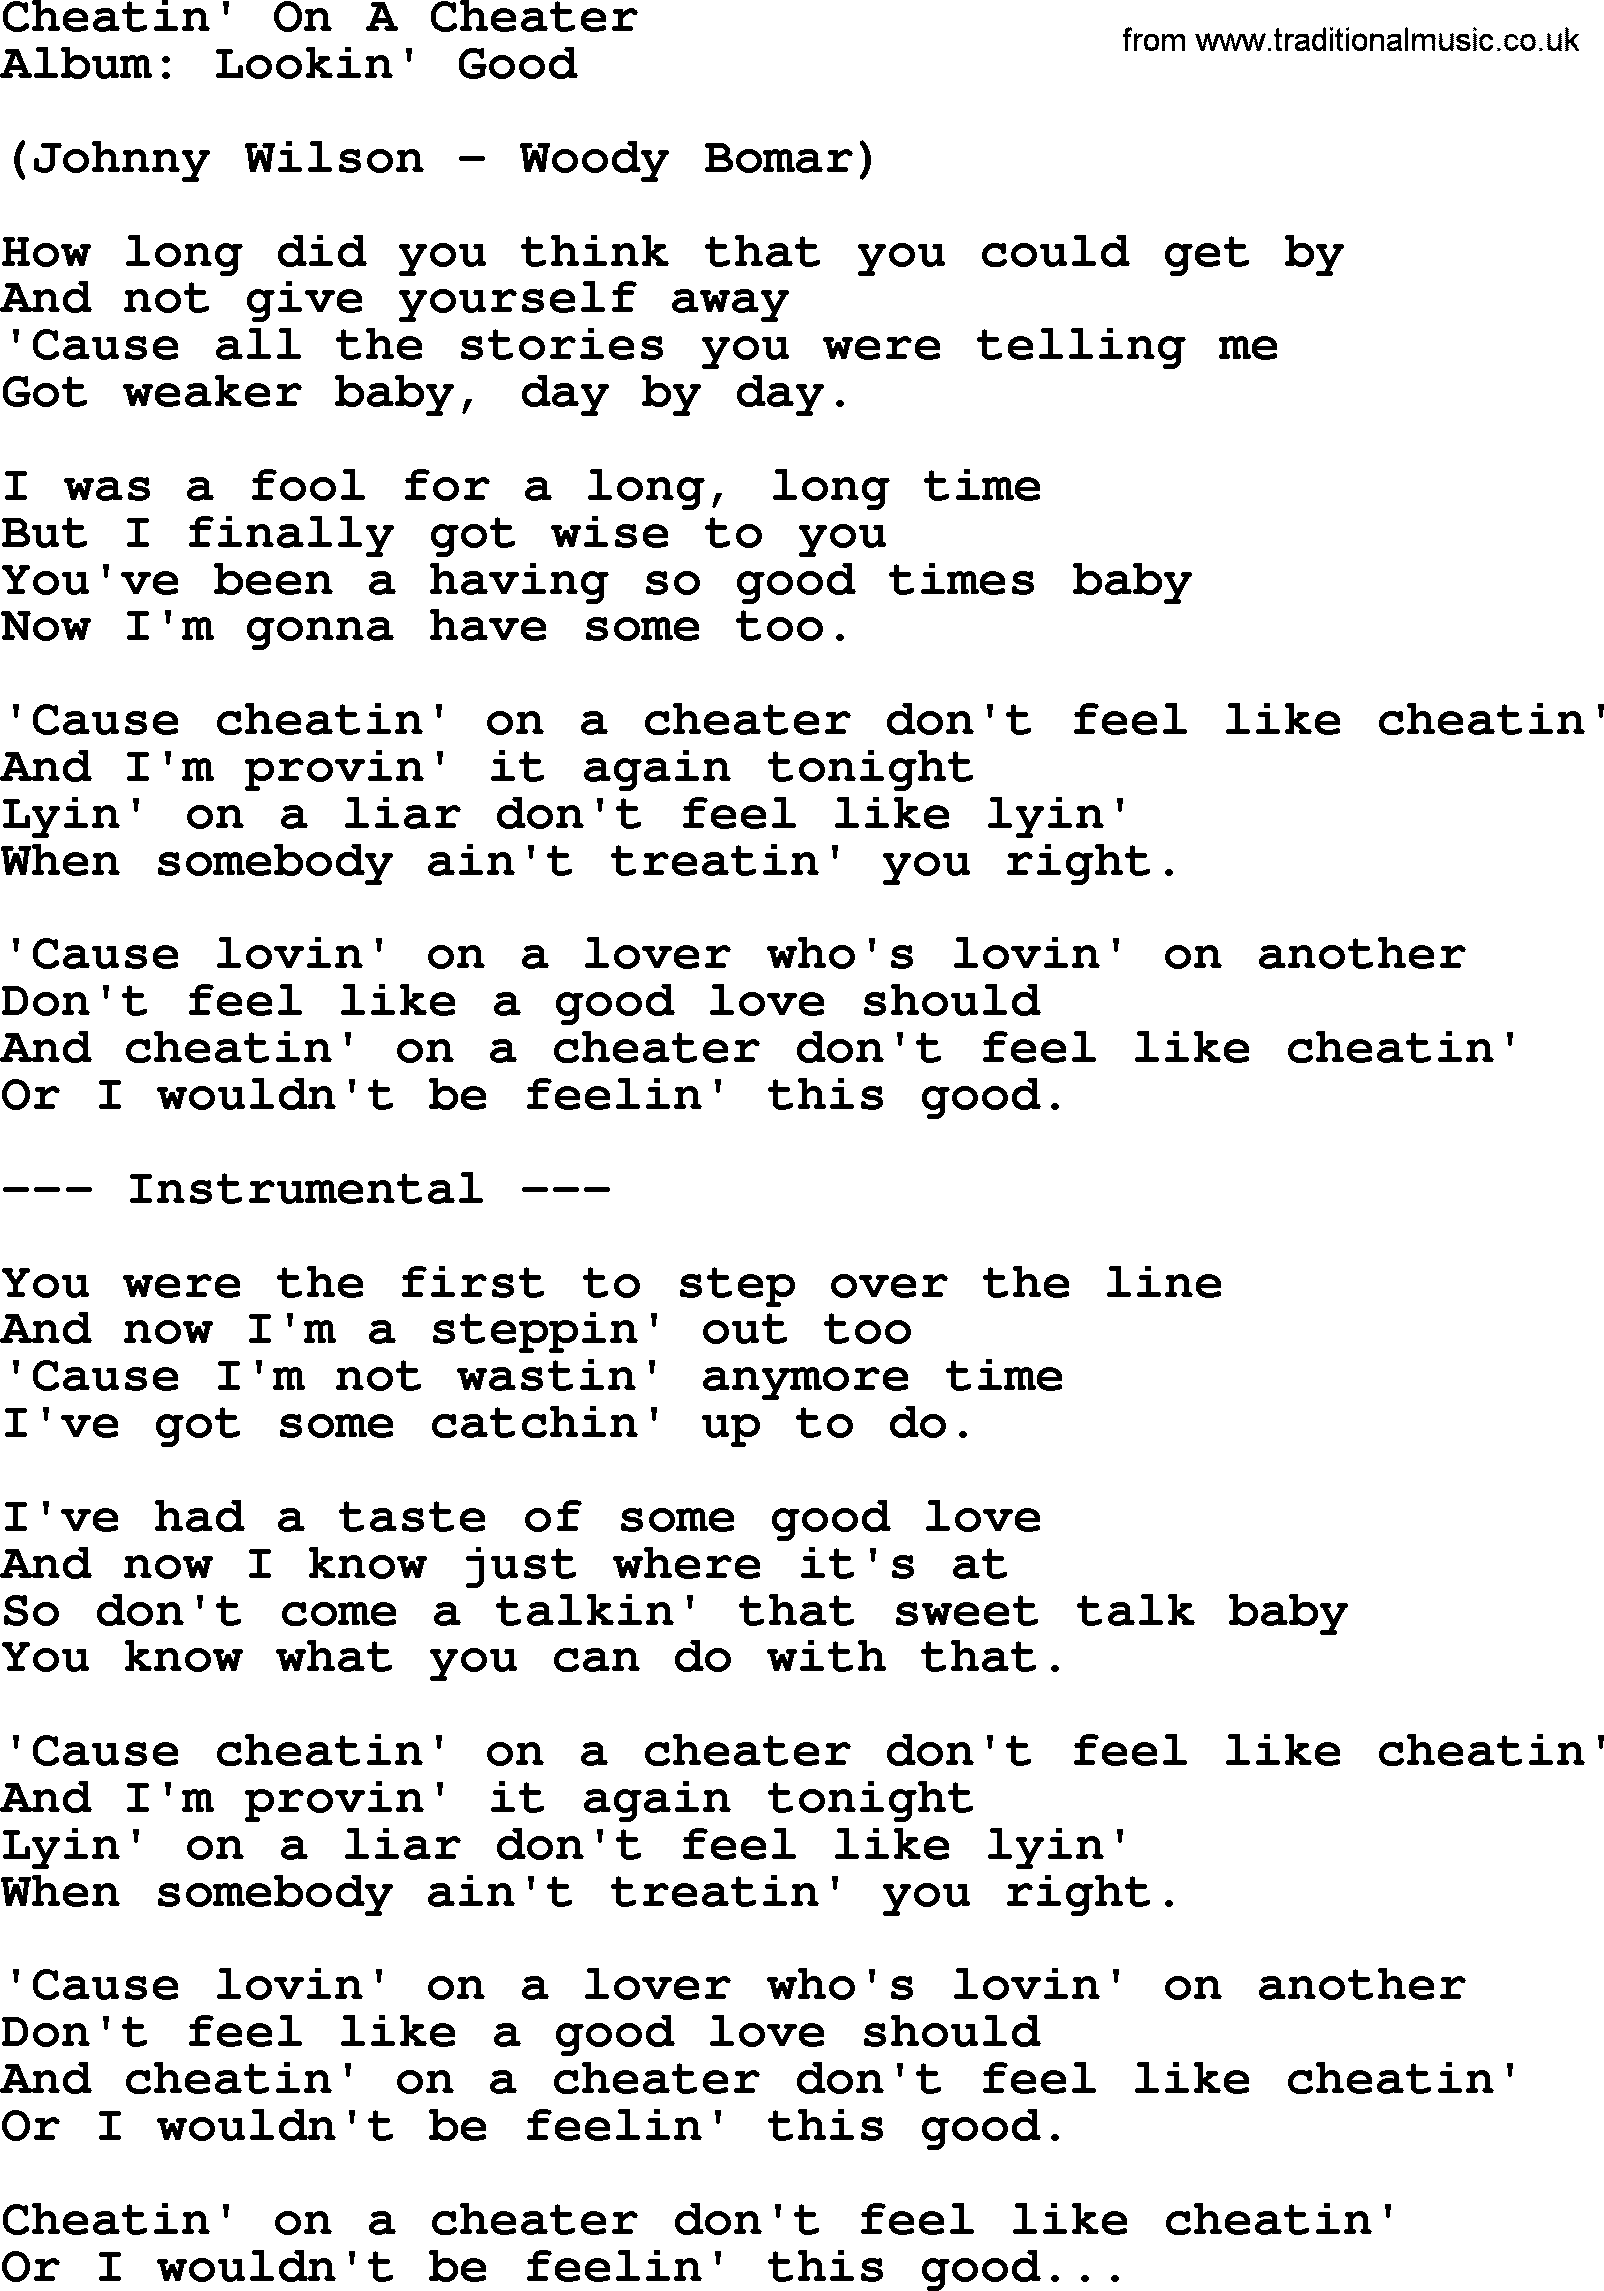 Loretta Lynn song: Cheatin' On A Cheater lyrics